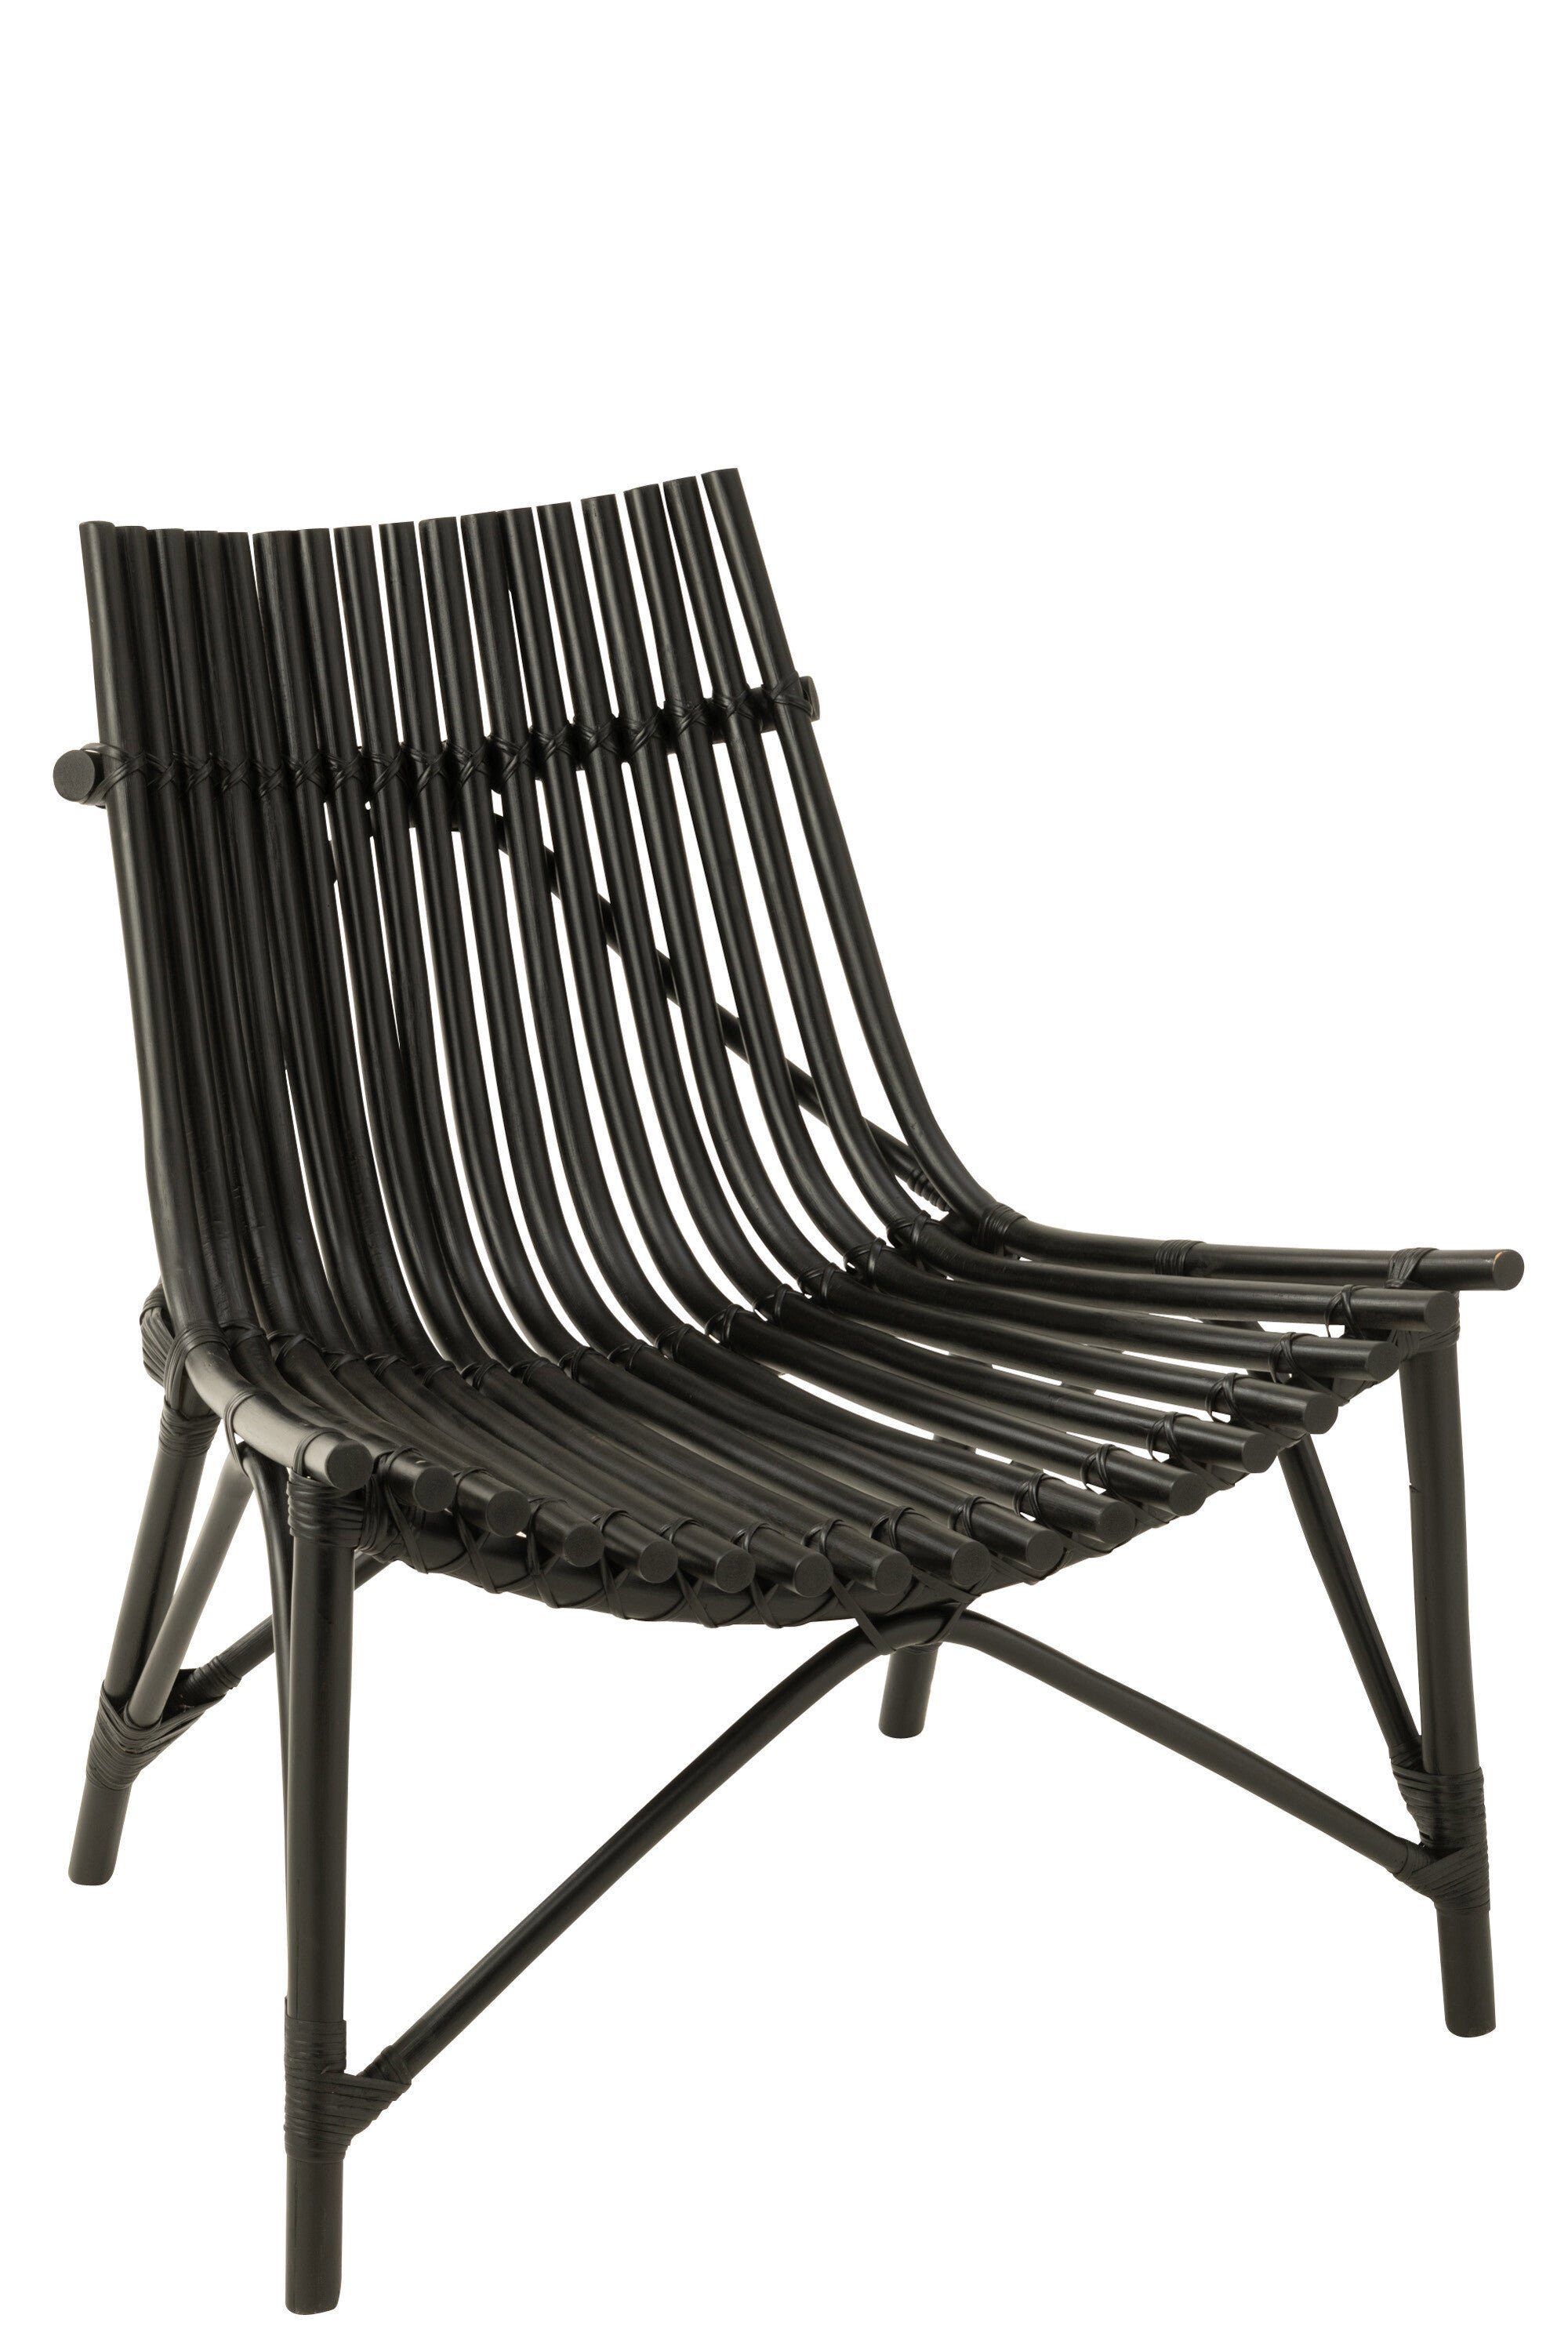 GILDE Dekoobjekt Exquisiter Rattan-Stuhl in Schwarz oder Naturell Handgefertigte Elegan